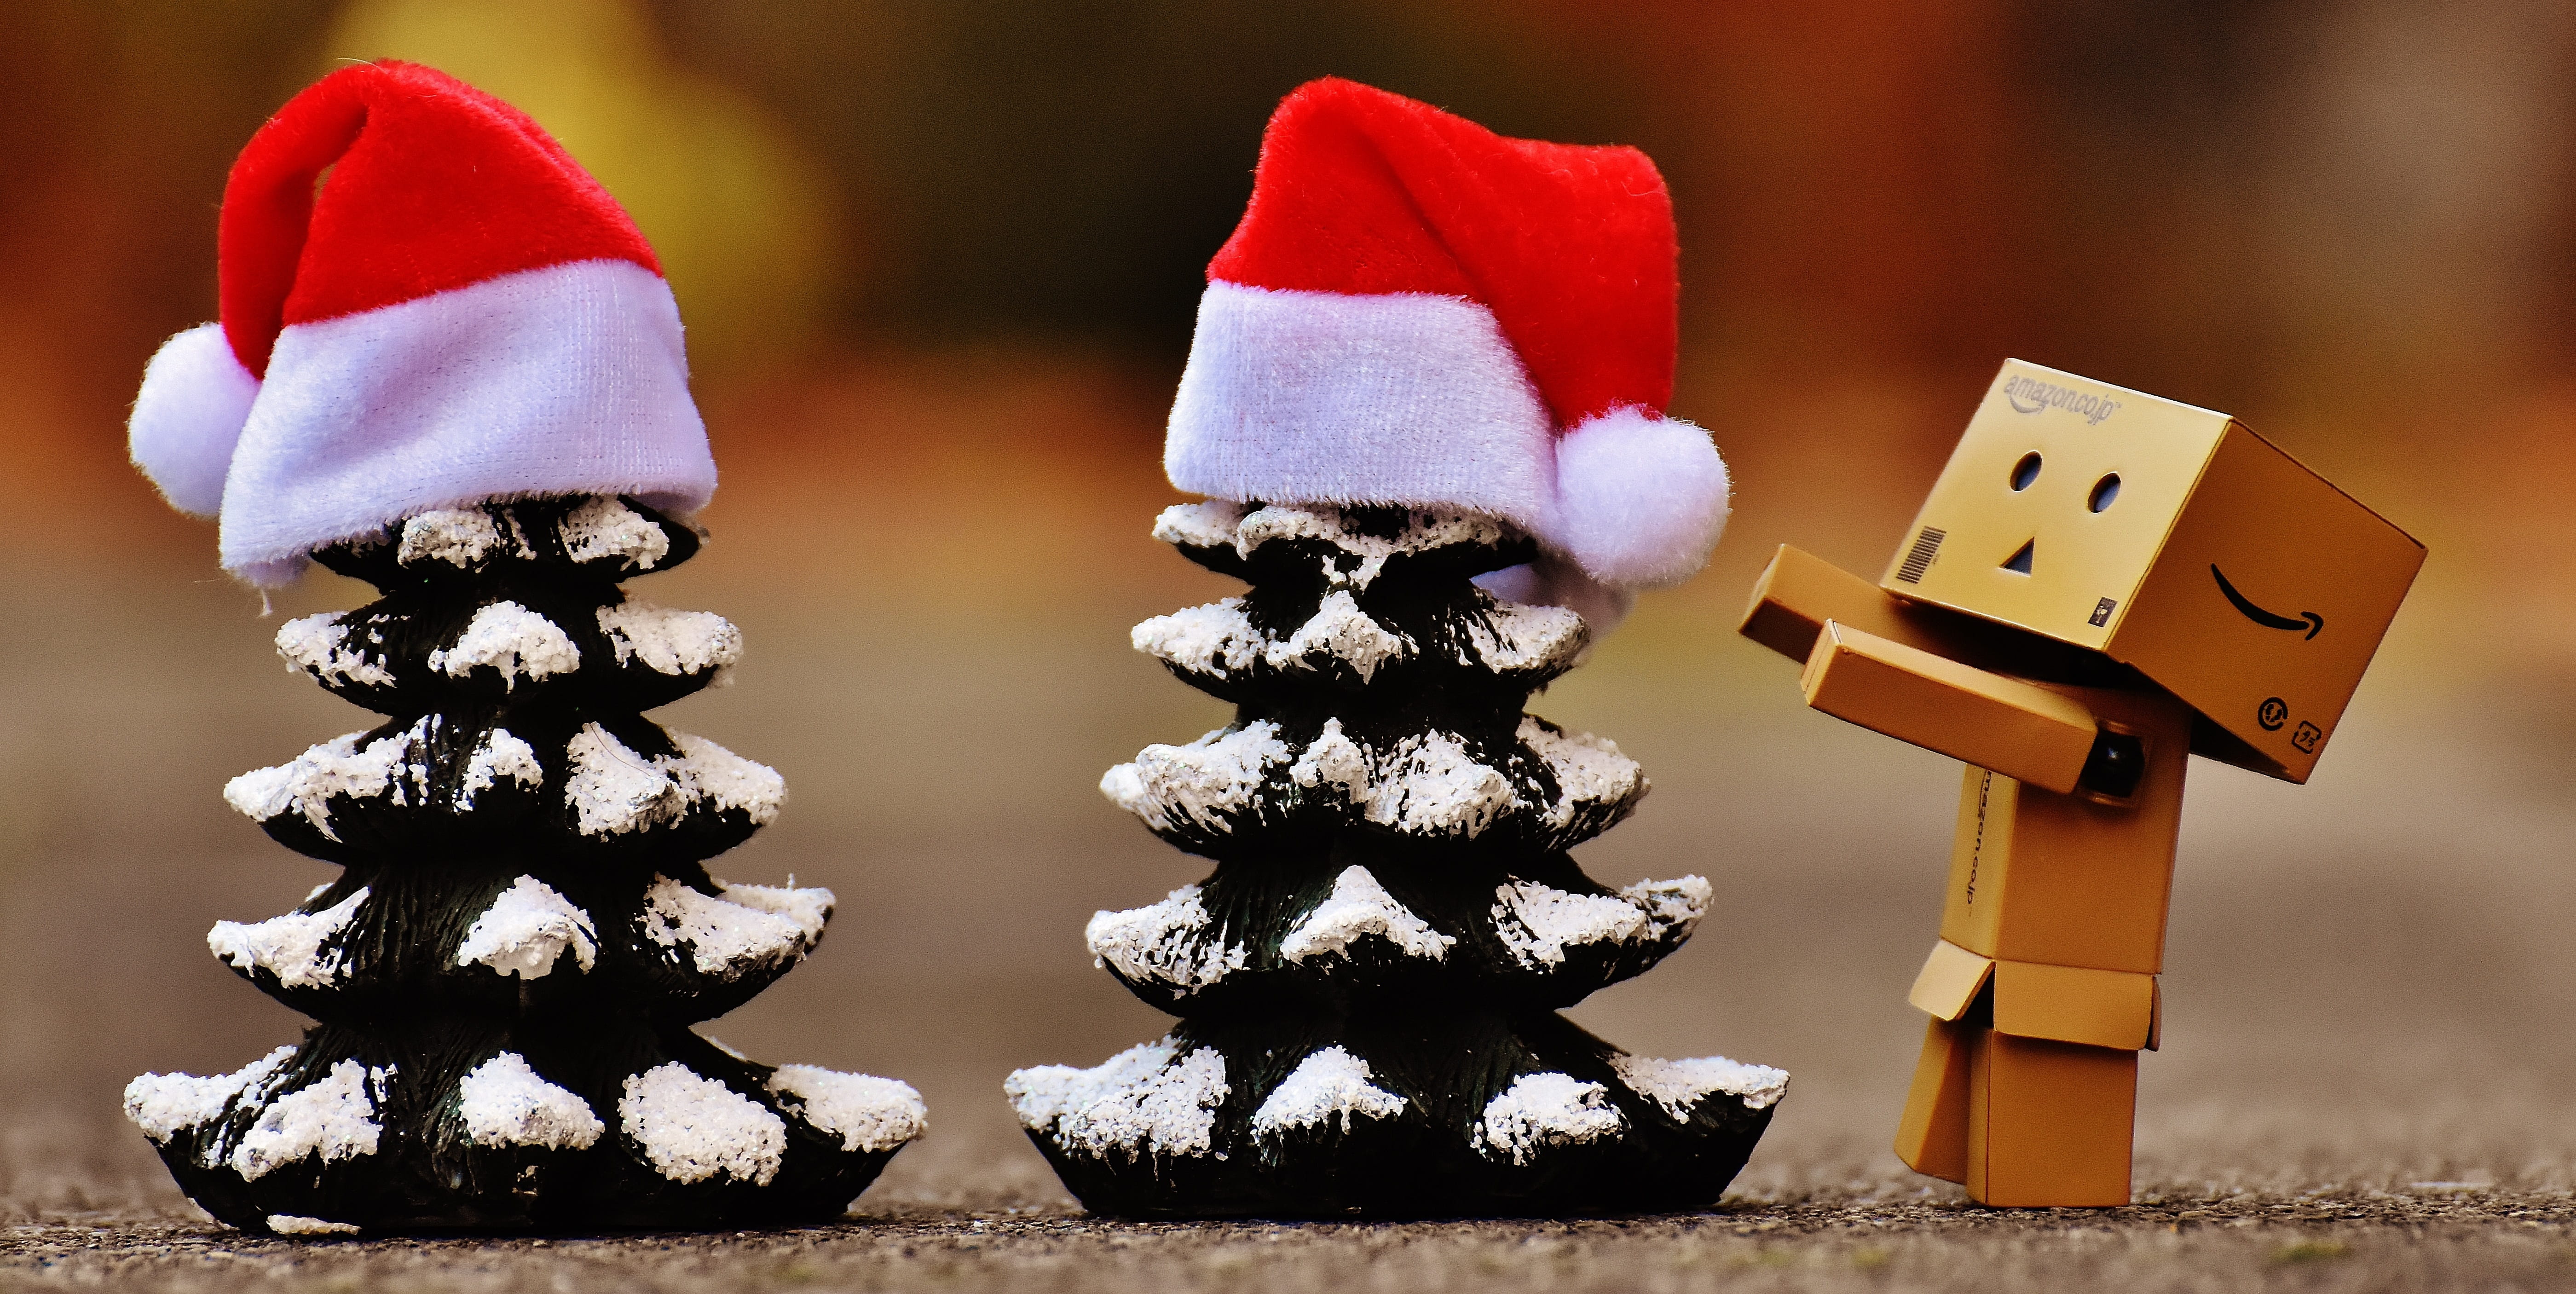 closeup photo of box figurine near the mini Christmas trees, Danbo